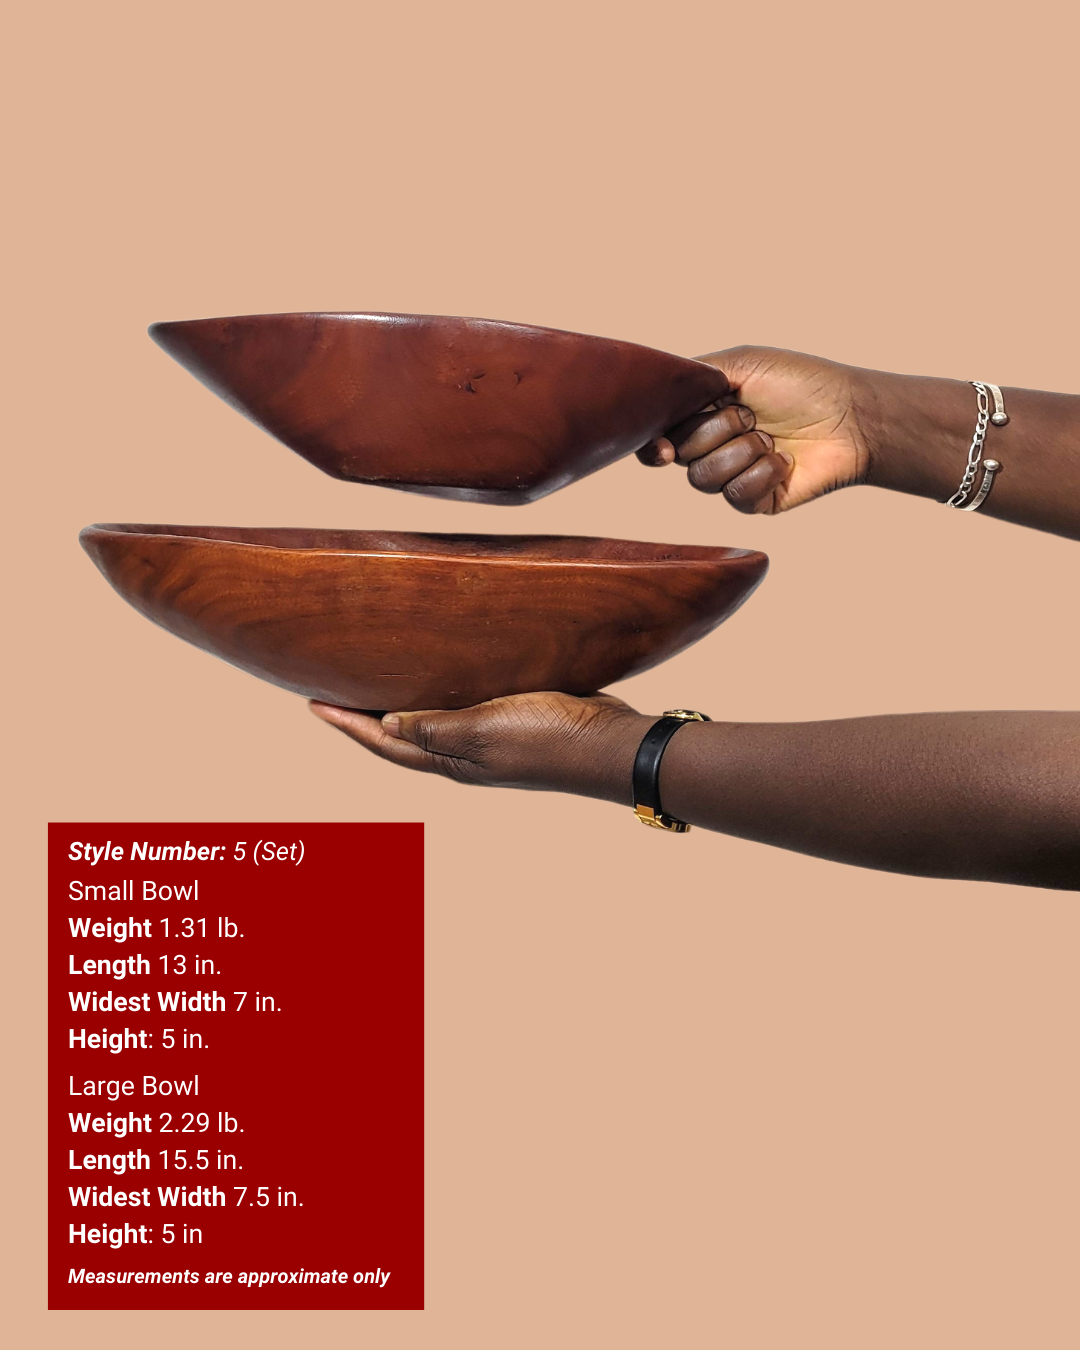 Oluyemi | Genuine Mahogany Bowls | Kai Lek Ha Collection